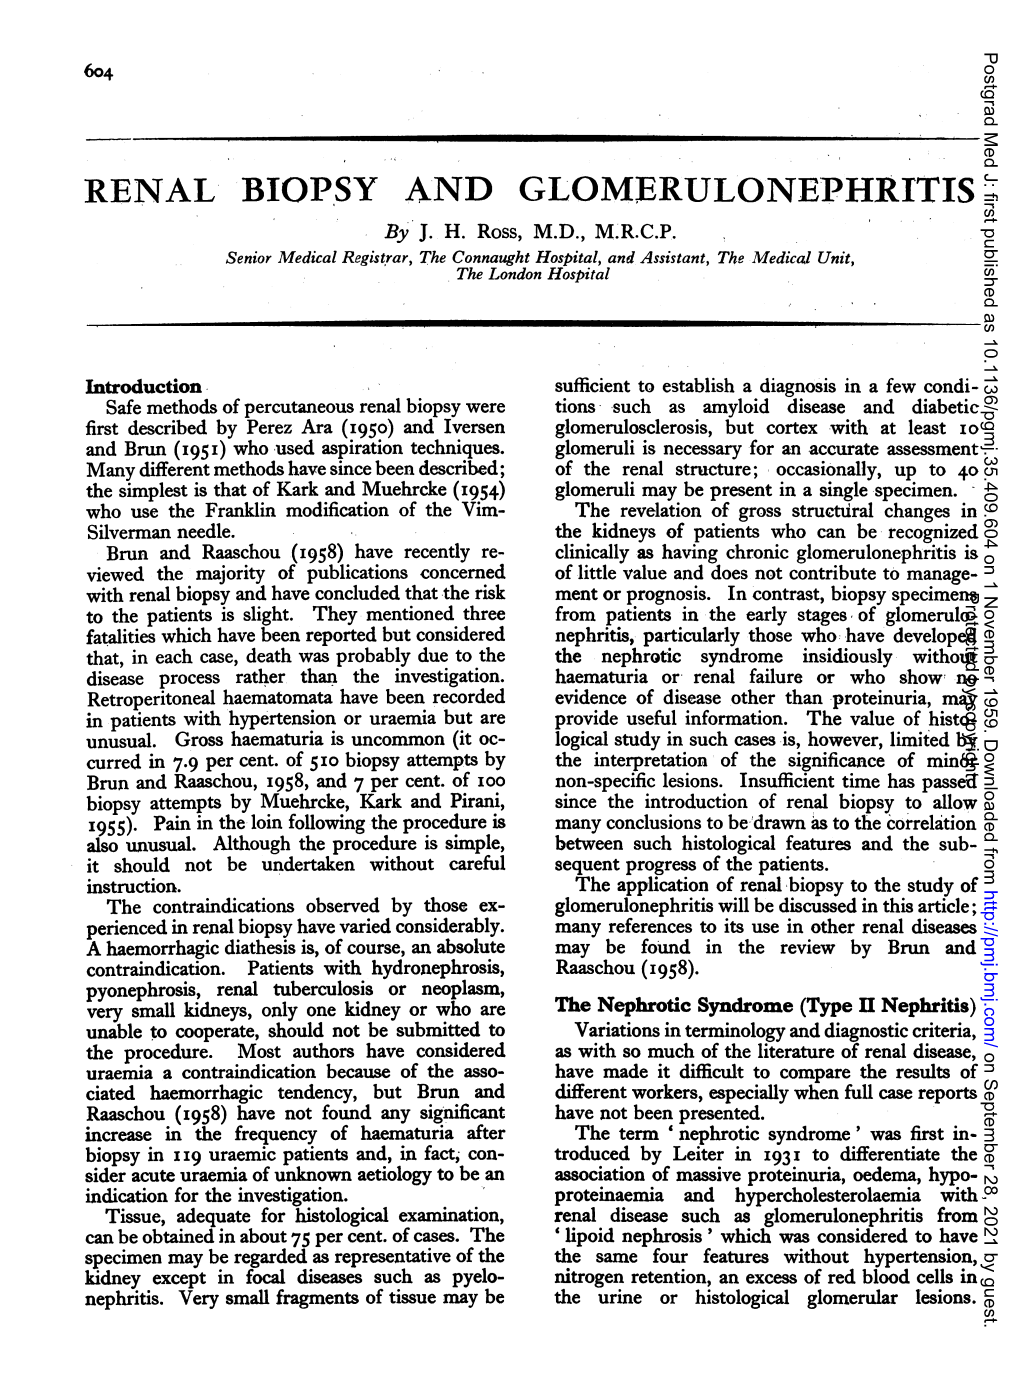 RENAL BIOPSY and GLOMERULONEPHRITIS by J